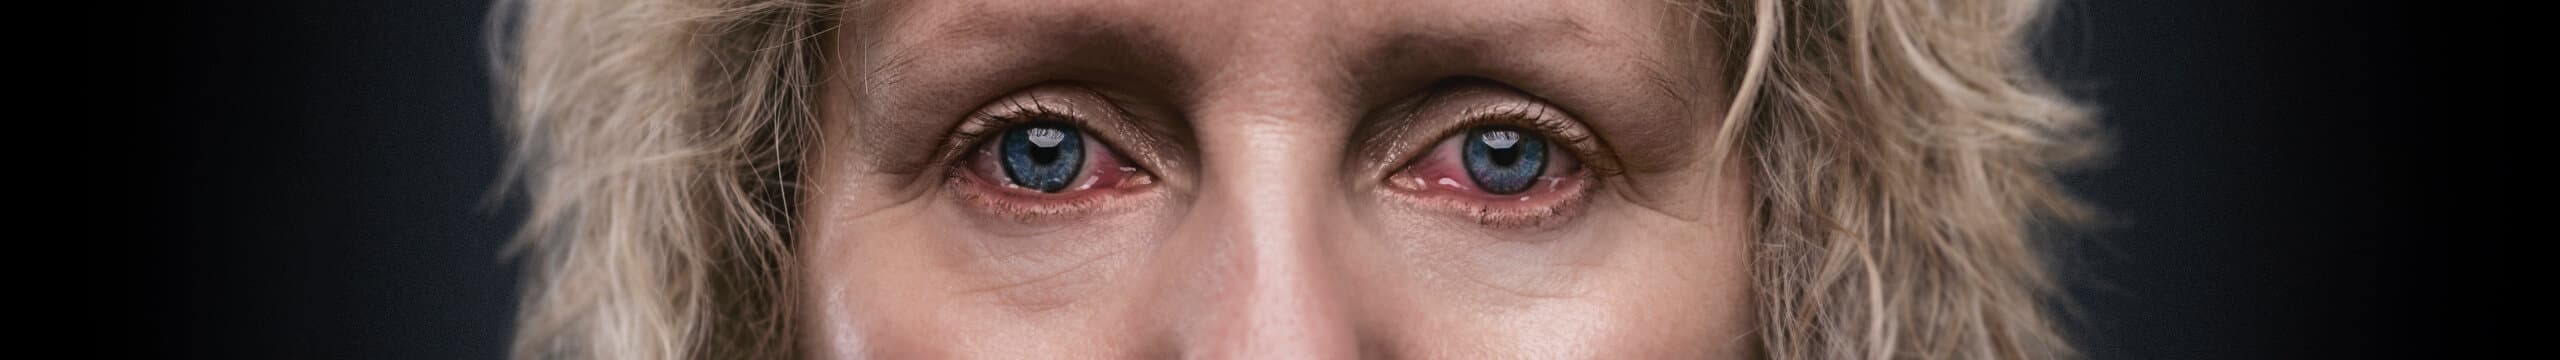 Depiction of red eyes from Thyroid Eye Disease